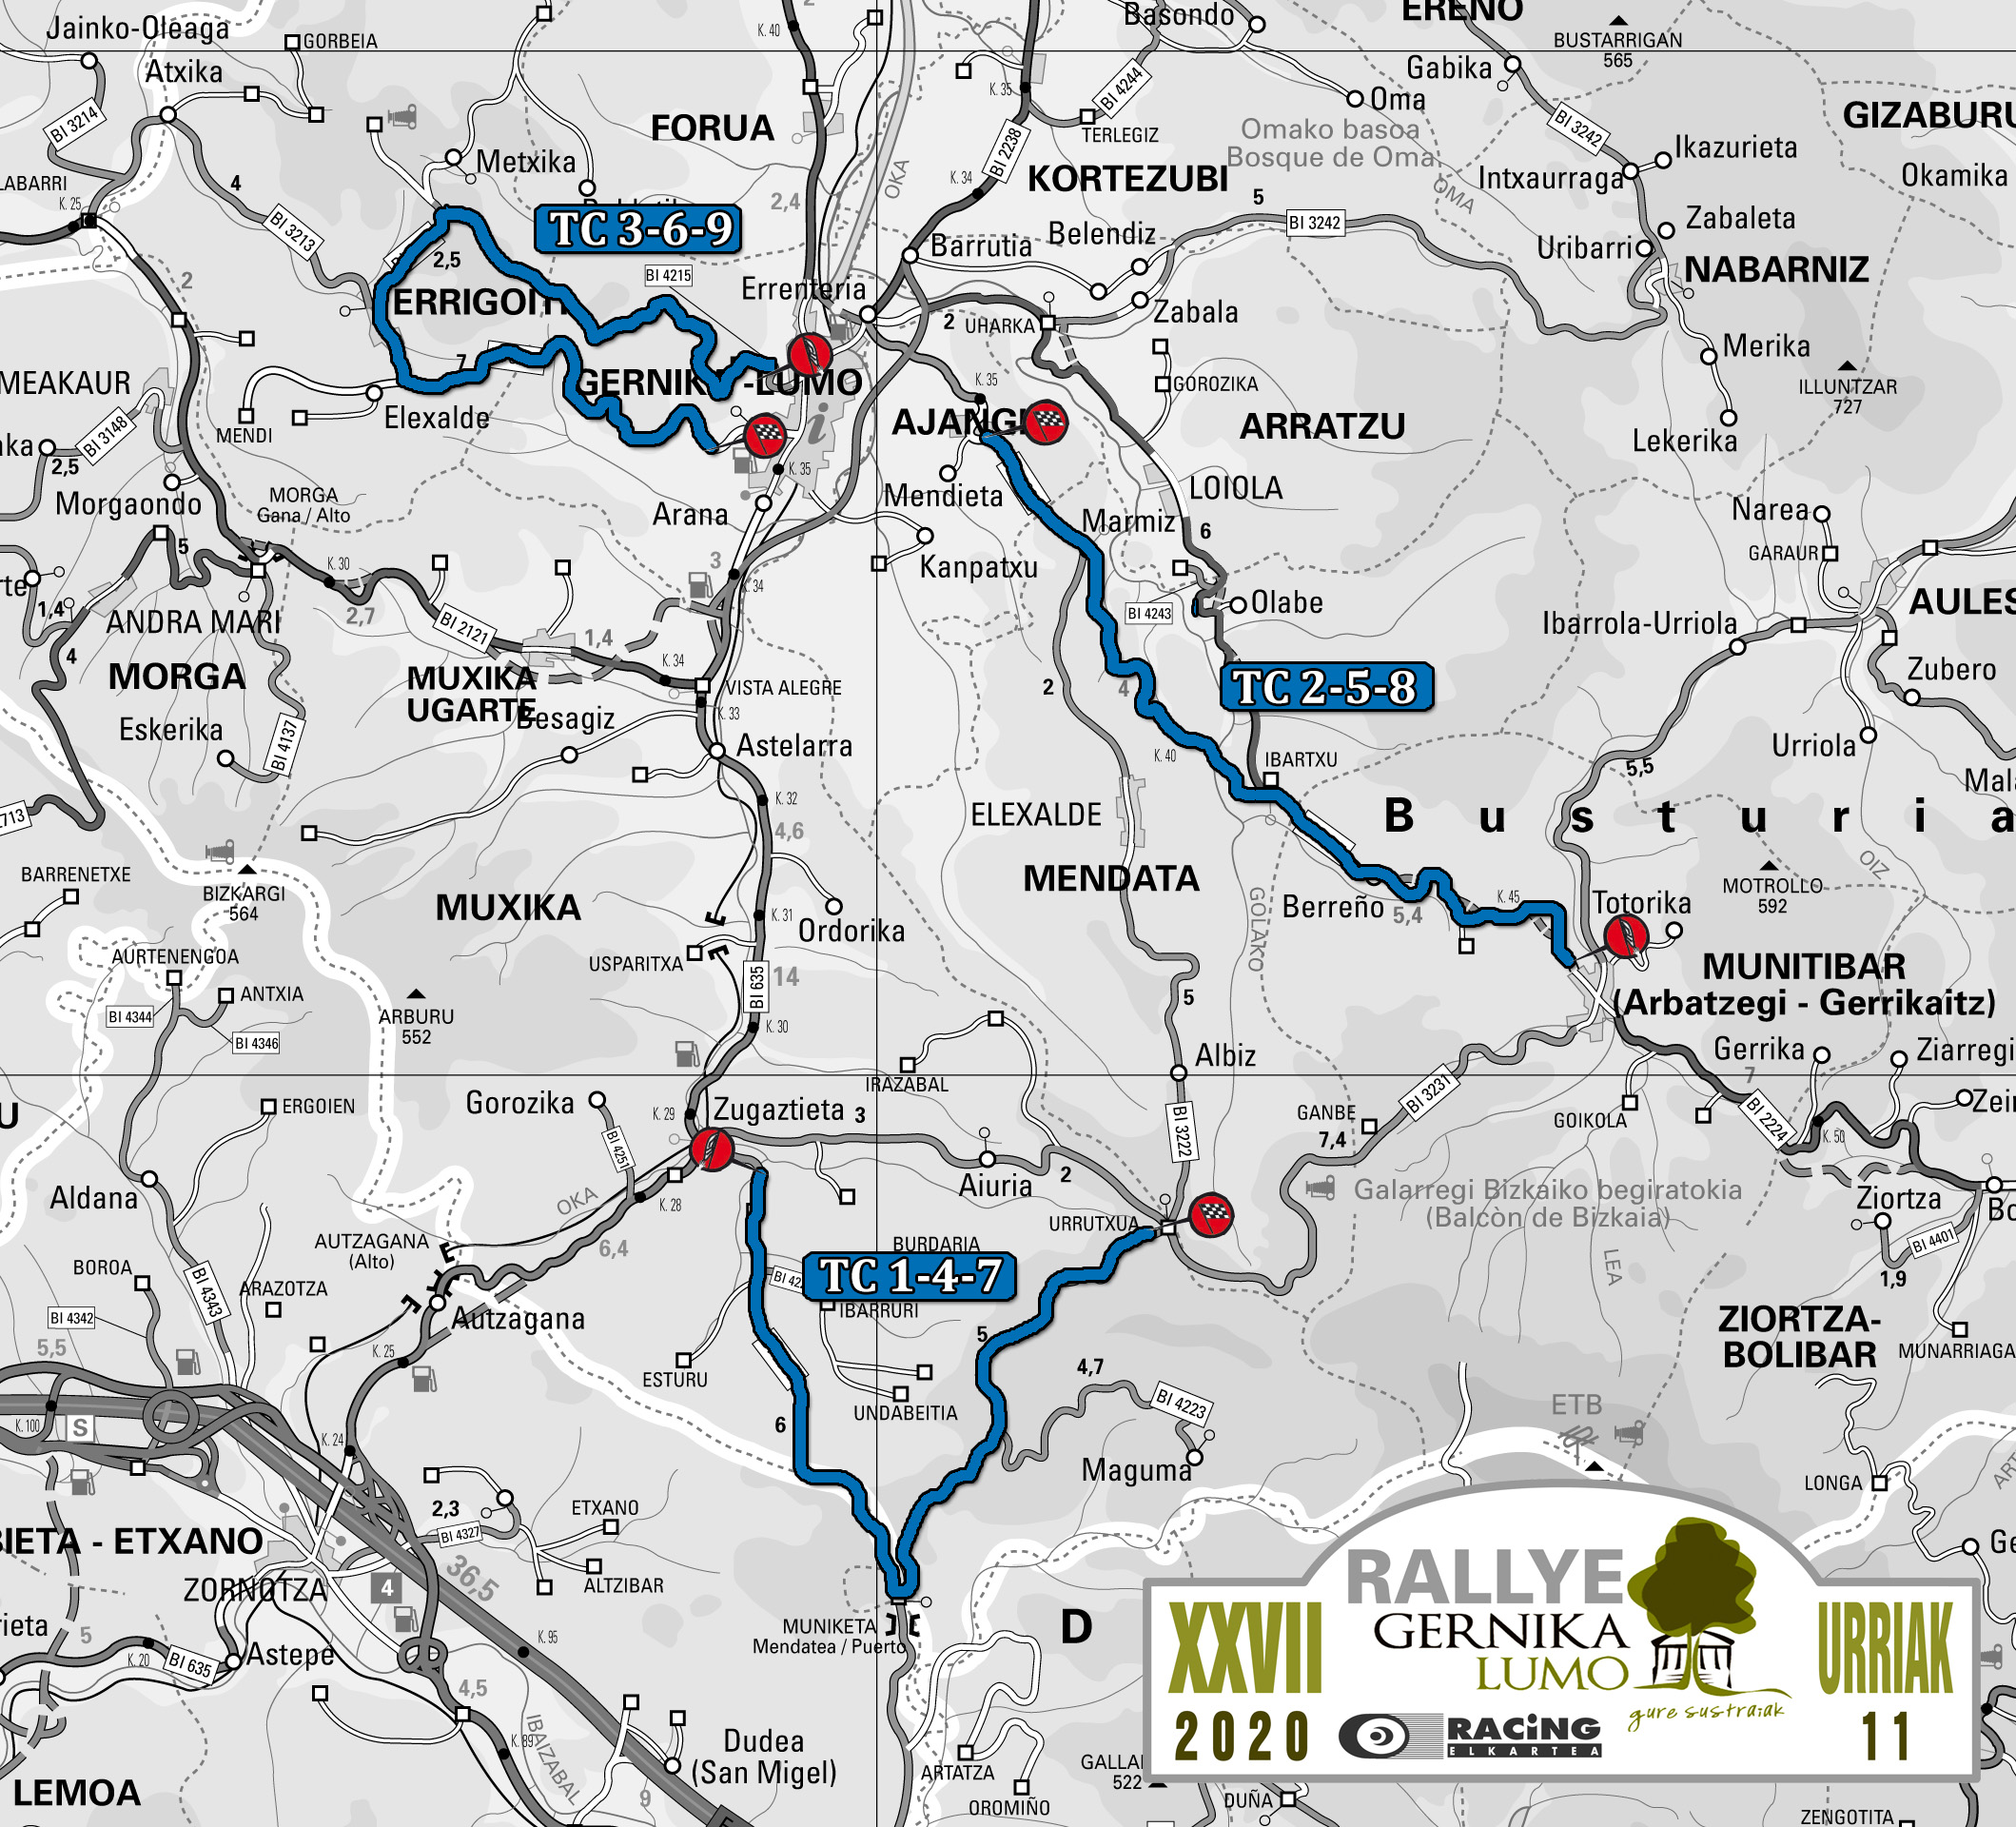 Mapa Rallye Gernika-Lumo 2020